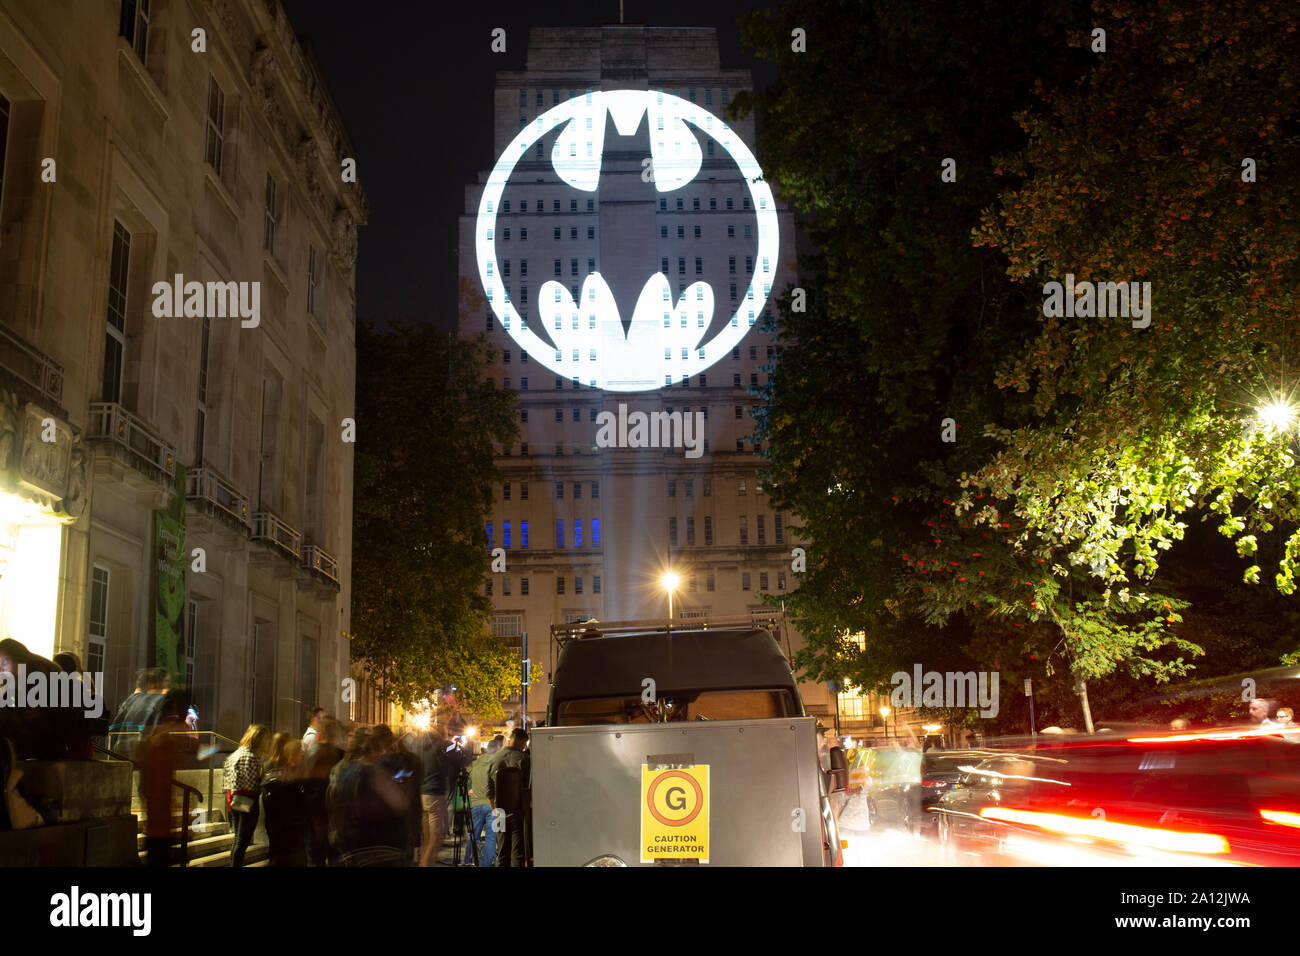 Gotham city batman hi-res stock photography and images - Alamy